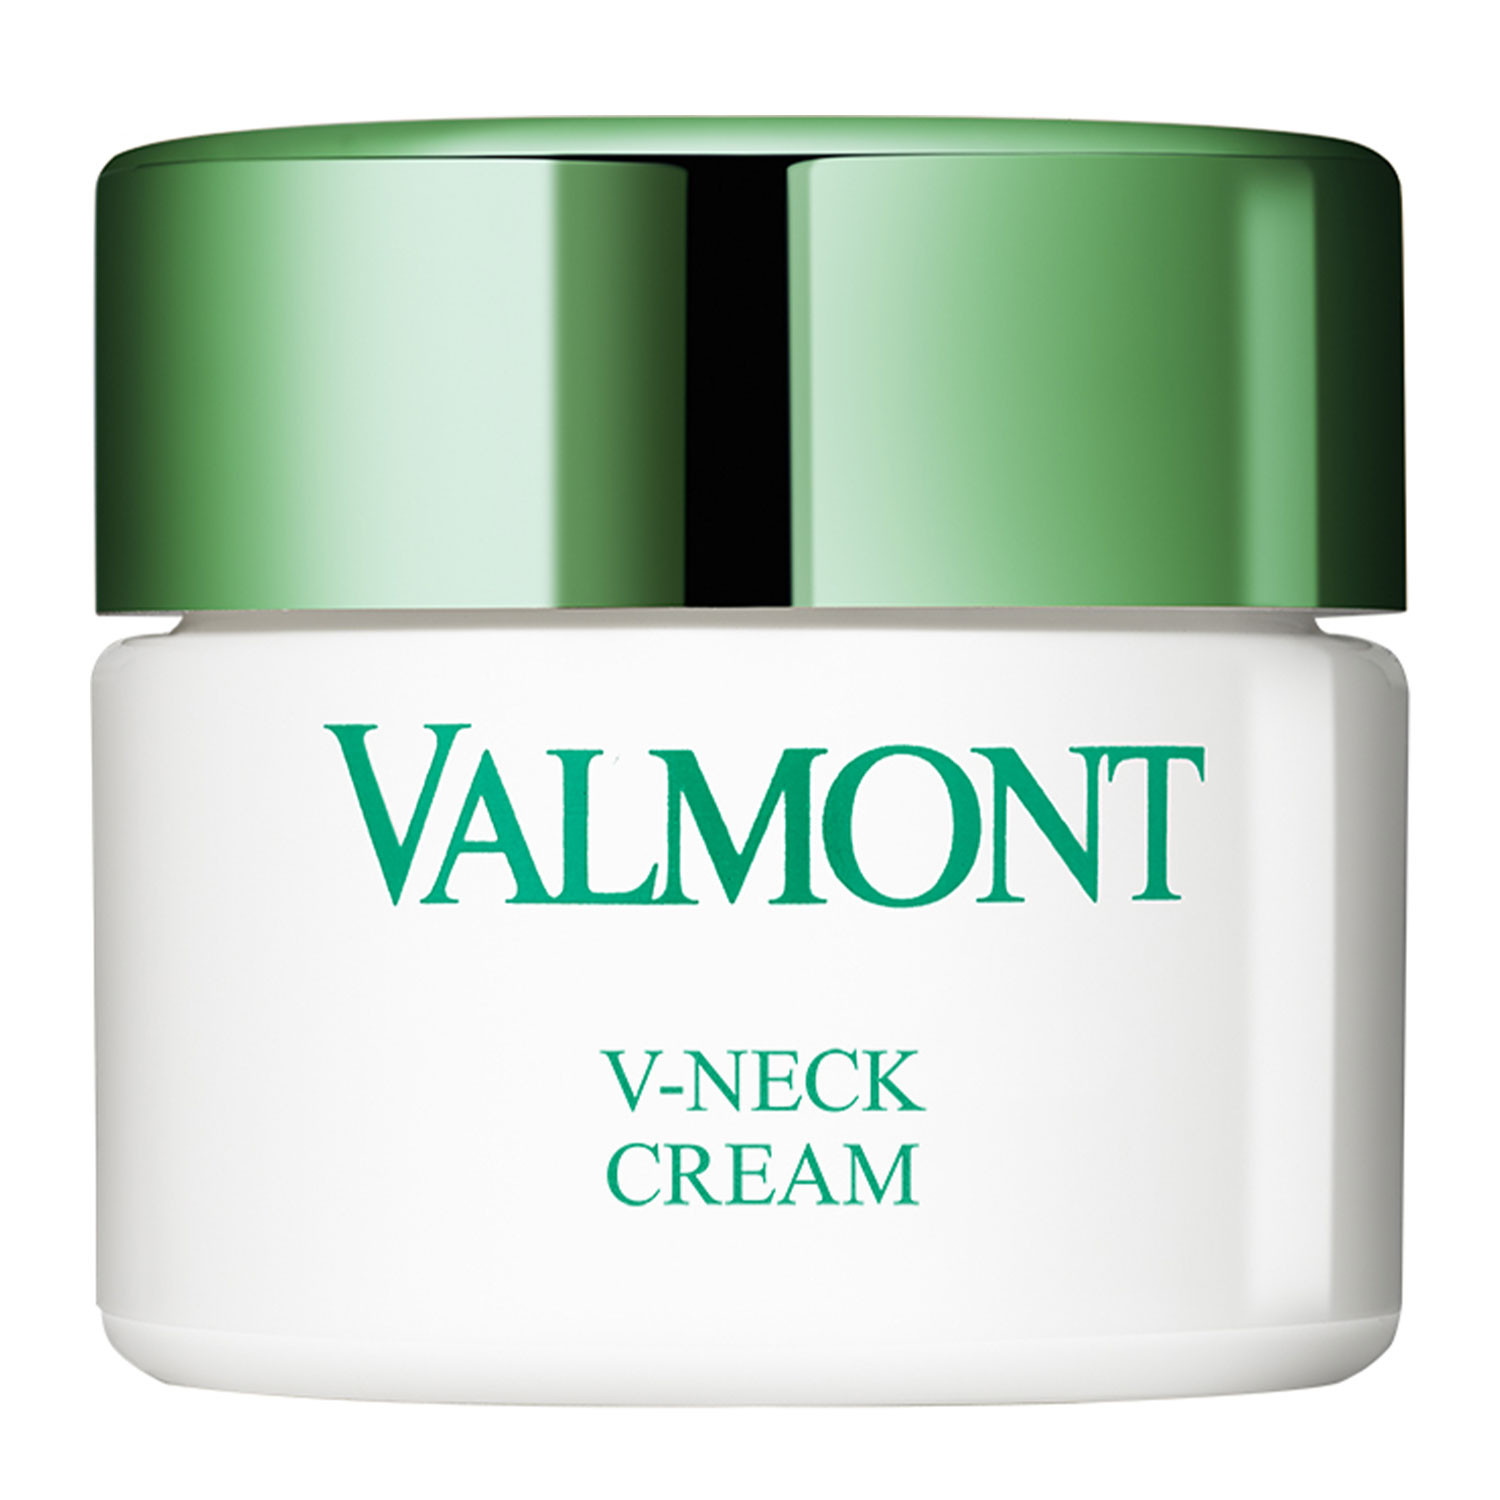 Відгуки про Valmont V-Neck Cream Антивозрастной крем для шеи